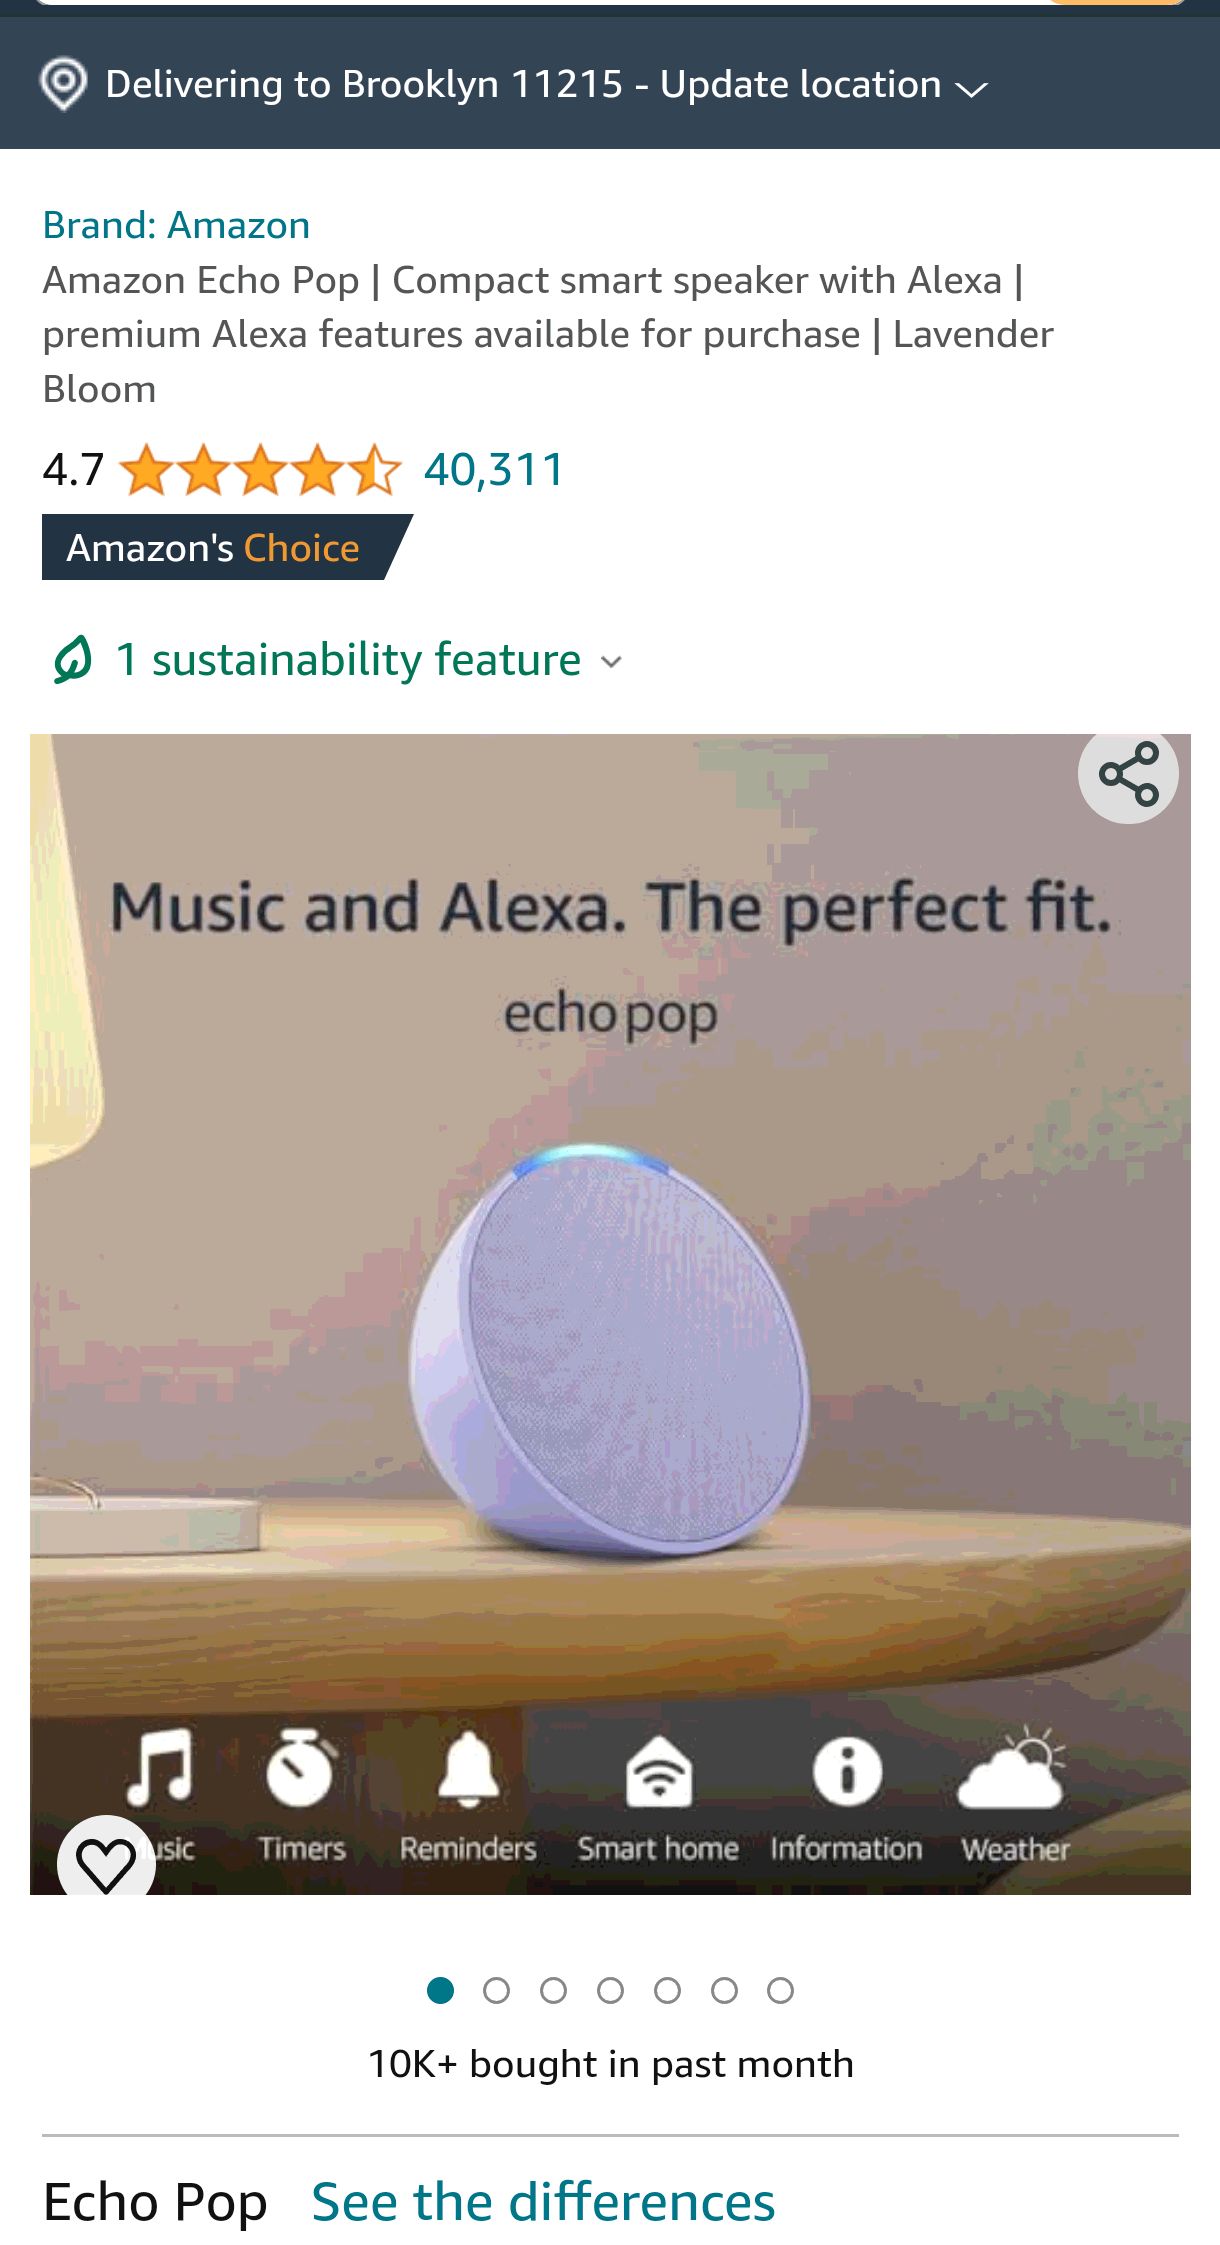 Echo Pop | Full sound compact smart speaker with Alexa | Lavender Bloom | Amazon